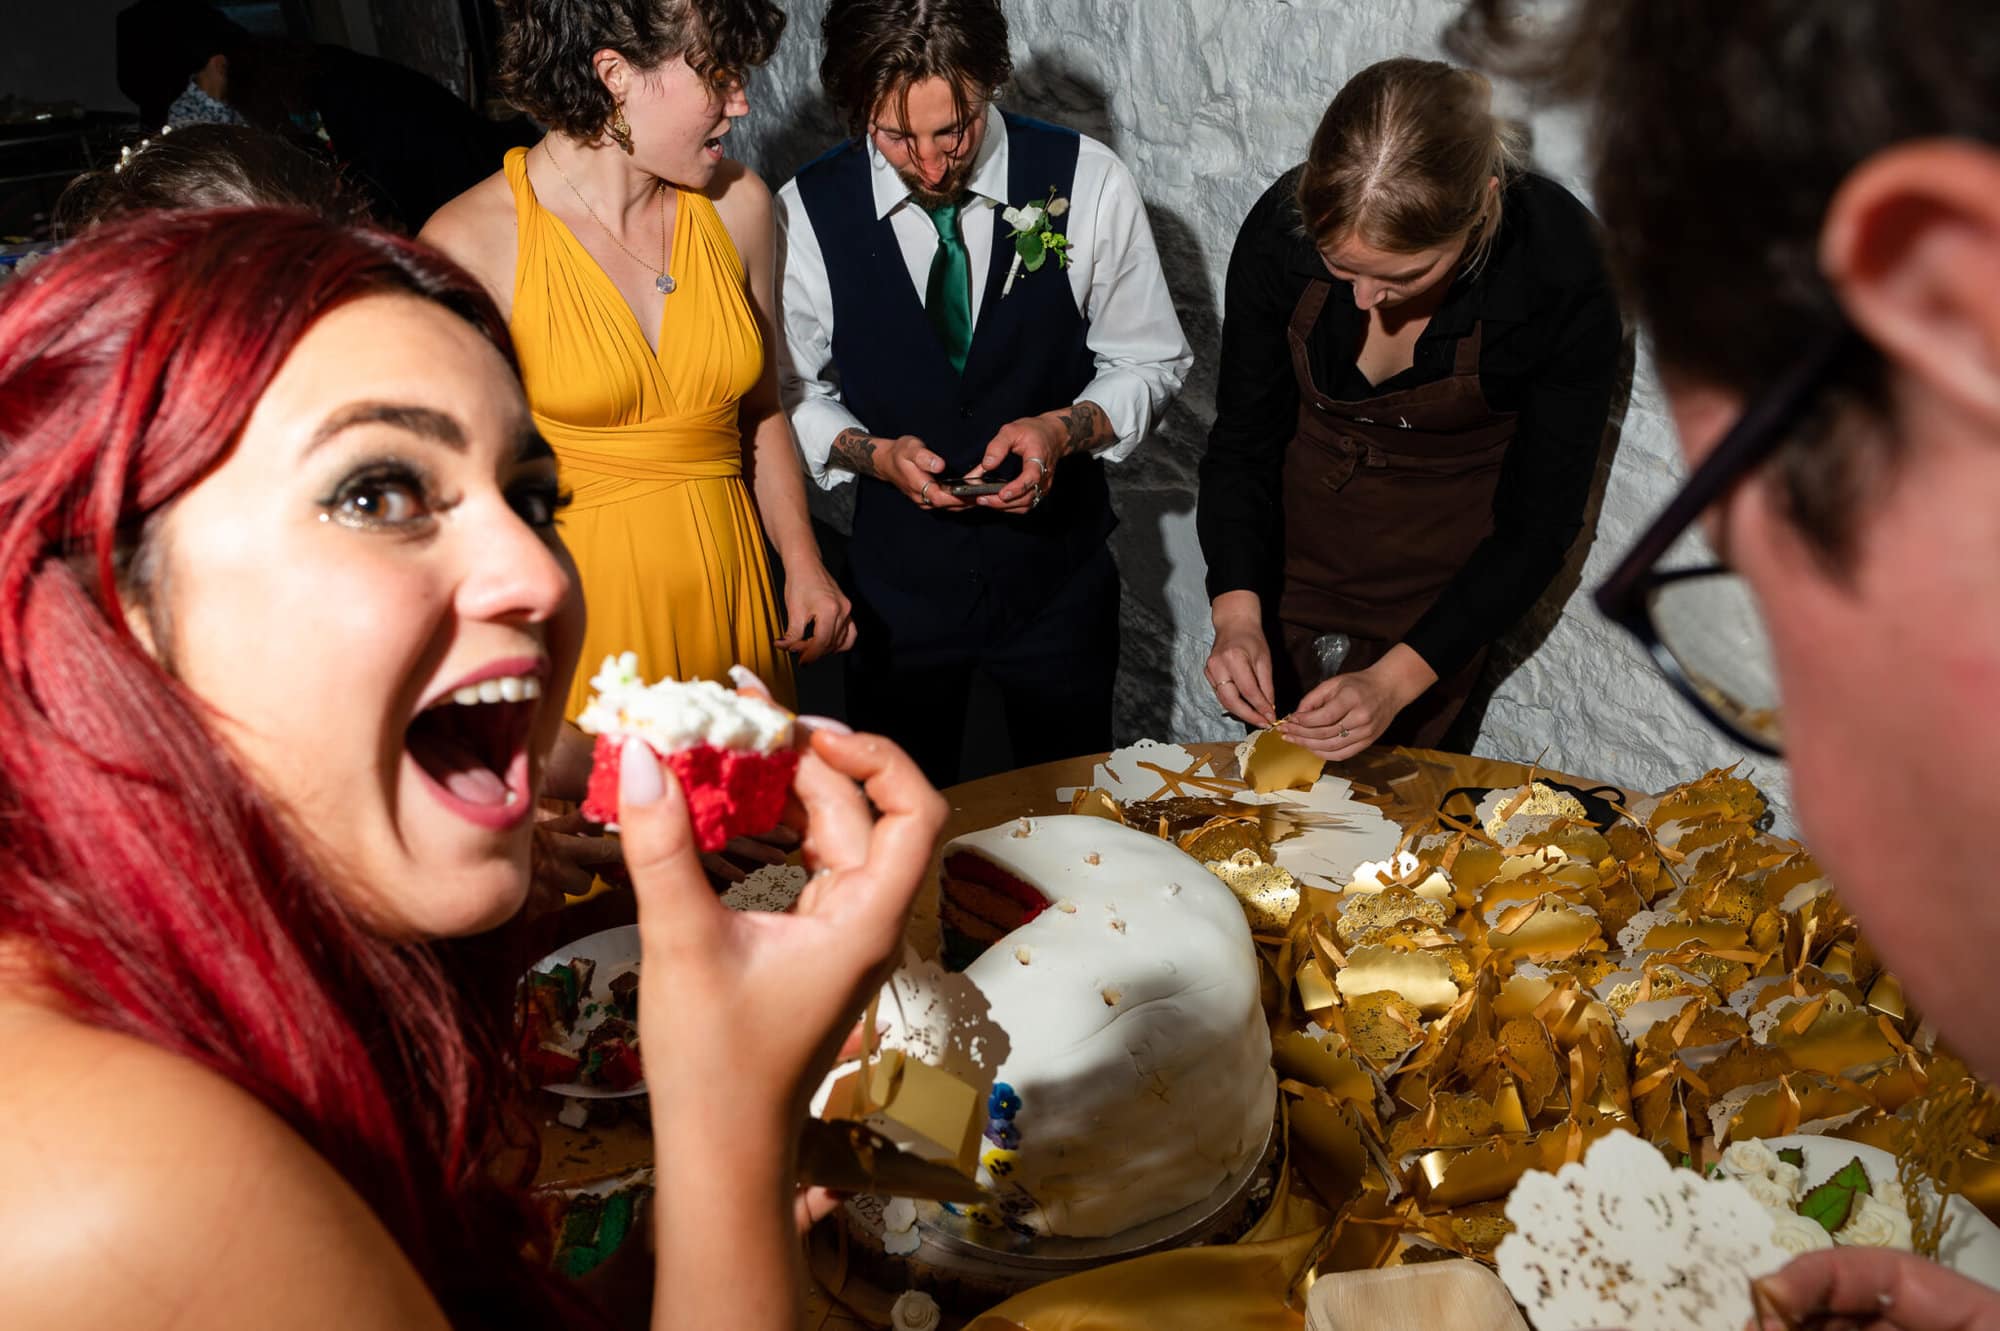 bridesmaid steals dome cake and gets caught atAshley Wood Farm wedding